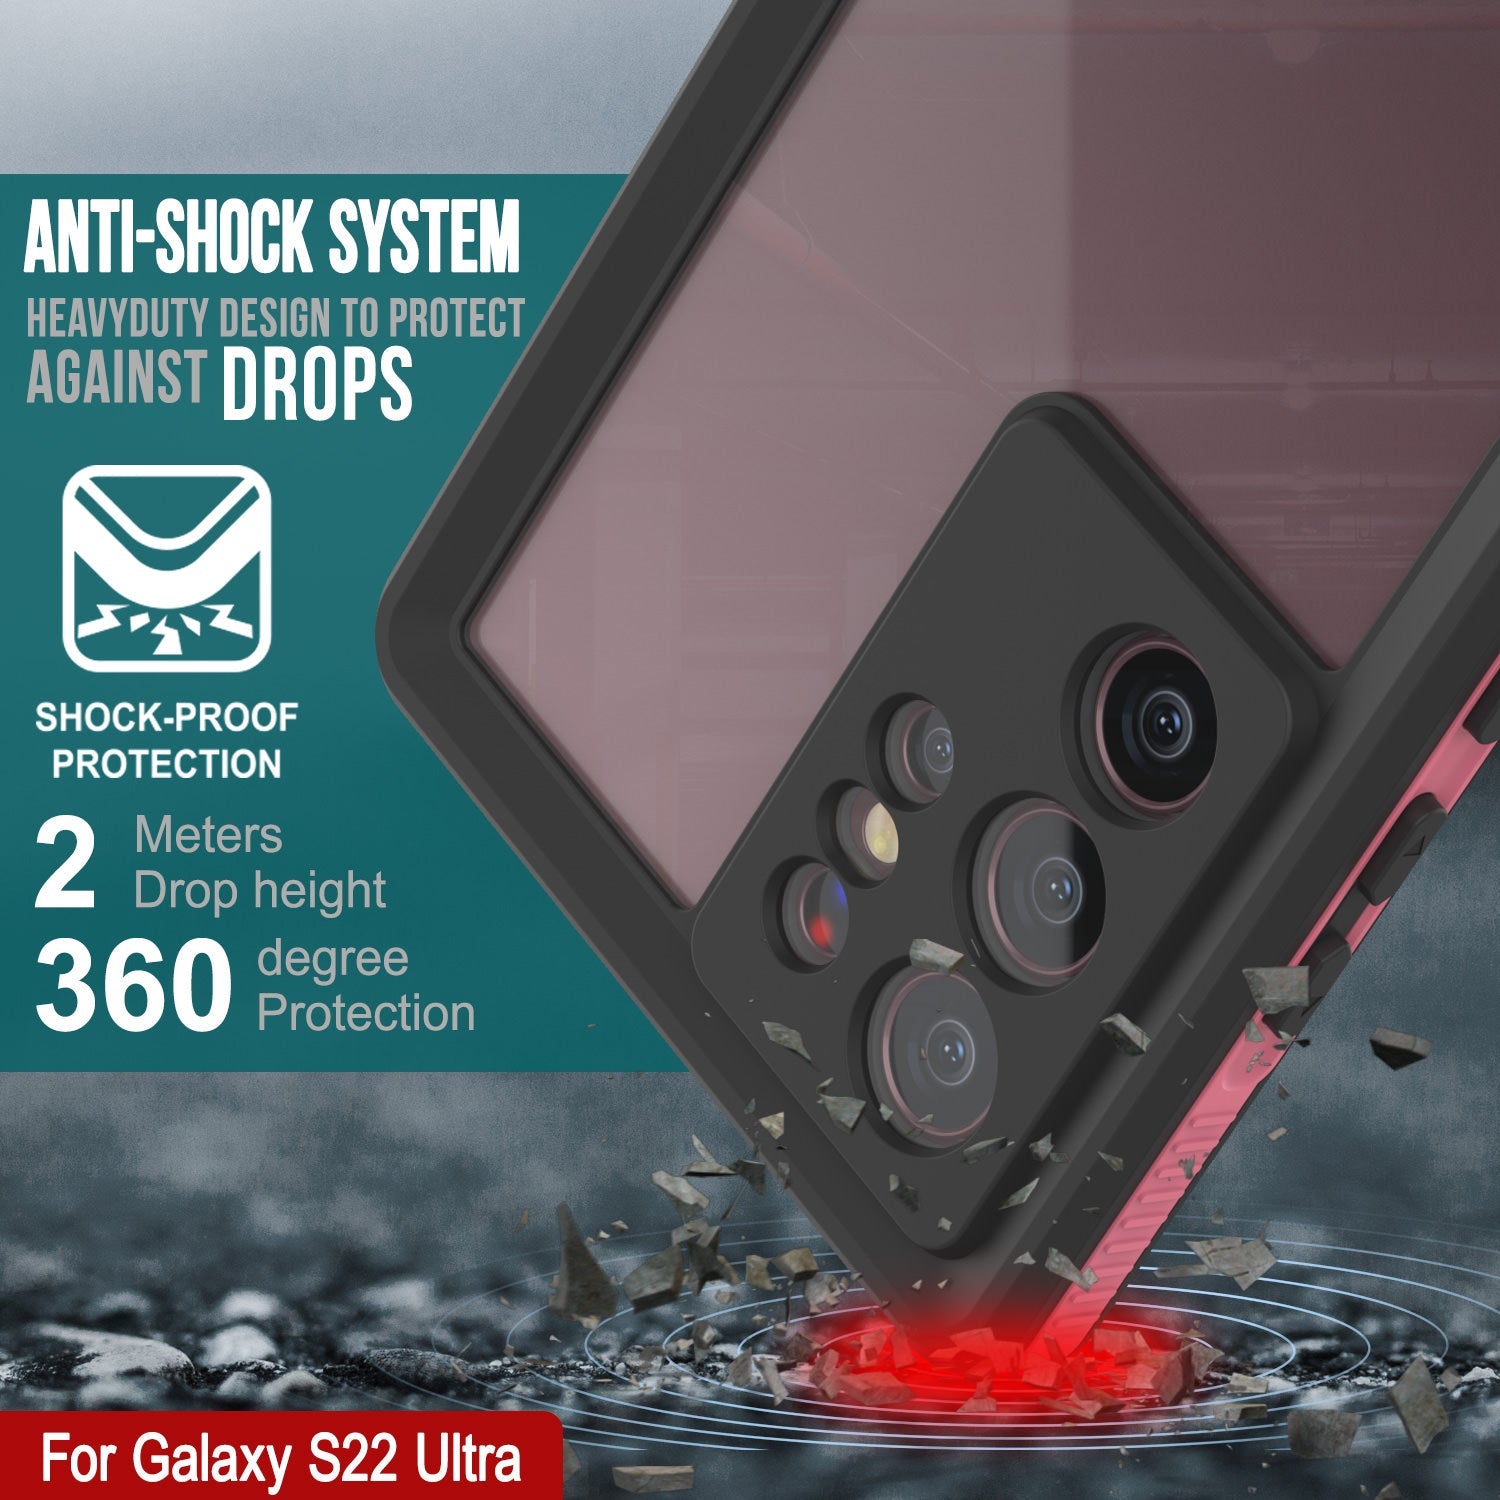 Galaxy S22 Ultra Waterproof Case PunkCase Ultimato Pink Thin 6.6ft Underwater IP68 Shock/Snow Proof [Pink]